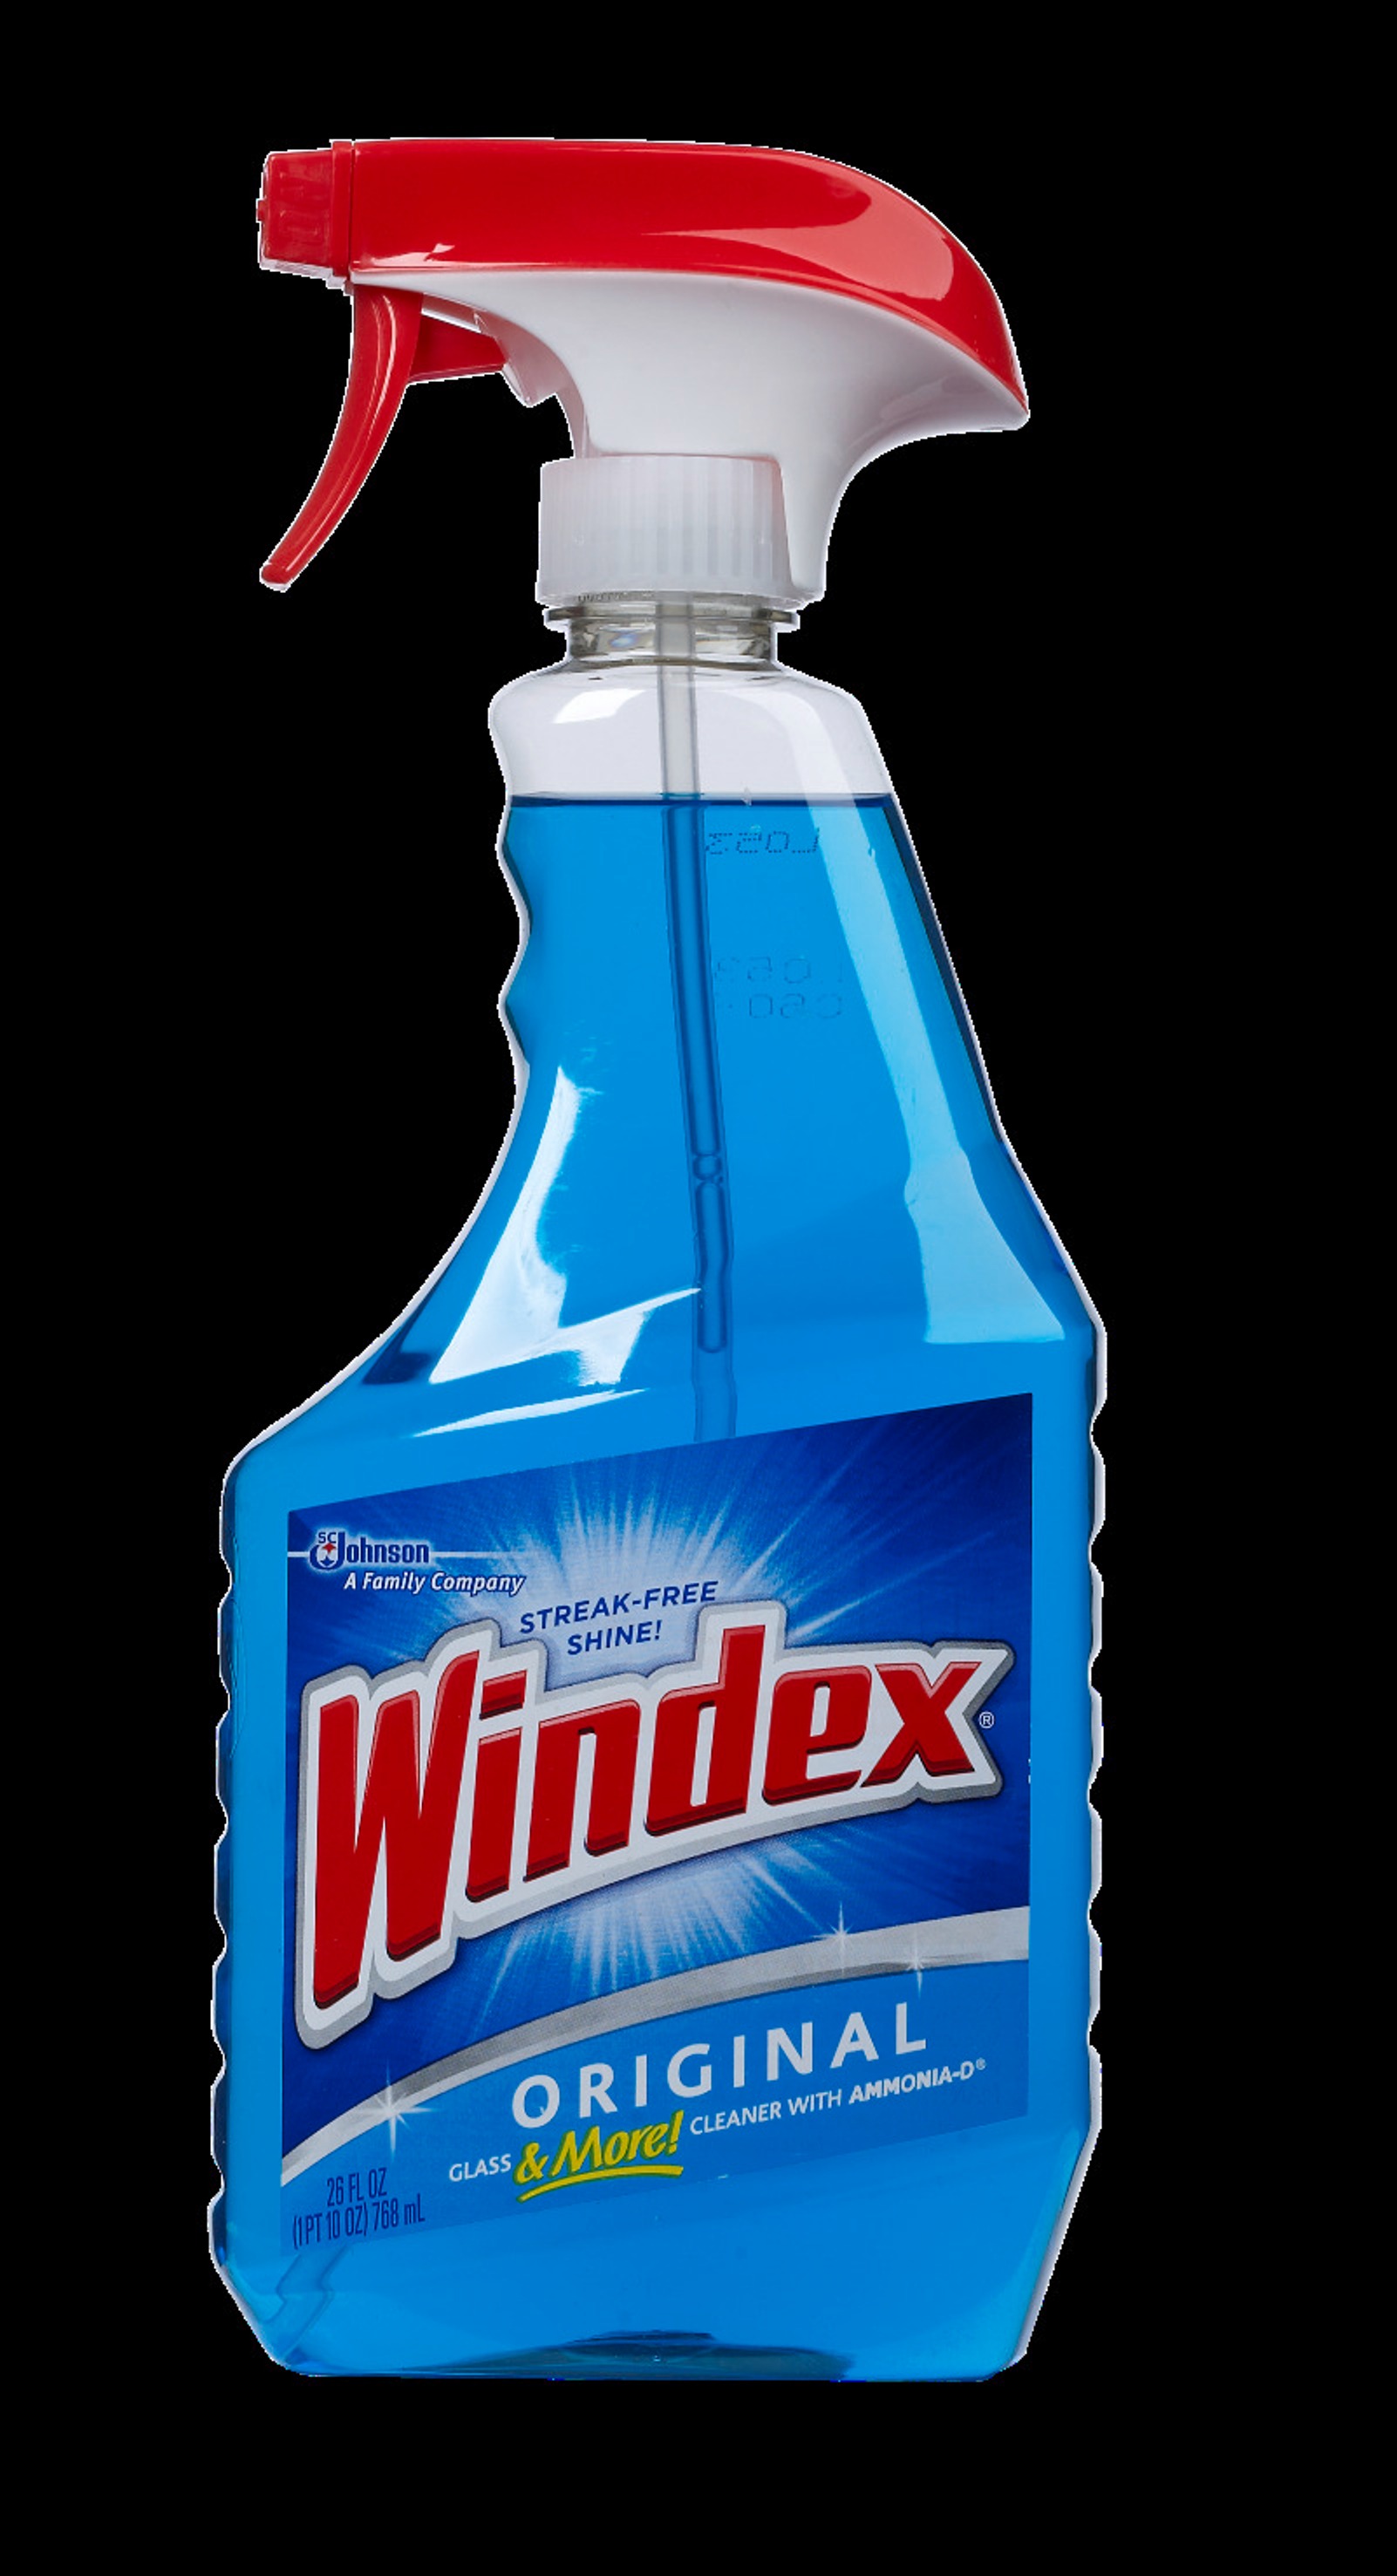 Windex Original Glass Cleaner, 26 fl oz (1 pt 10 oz) 768 ml